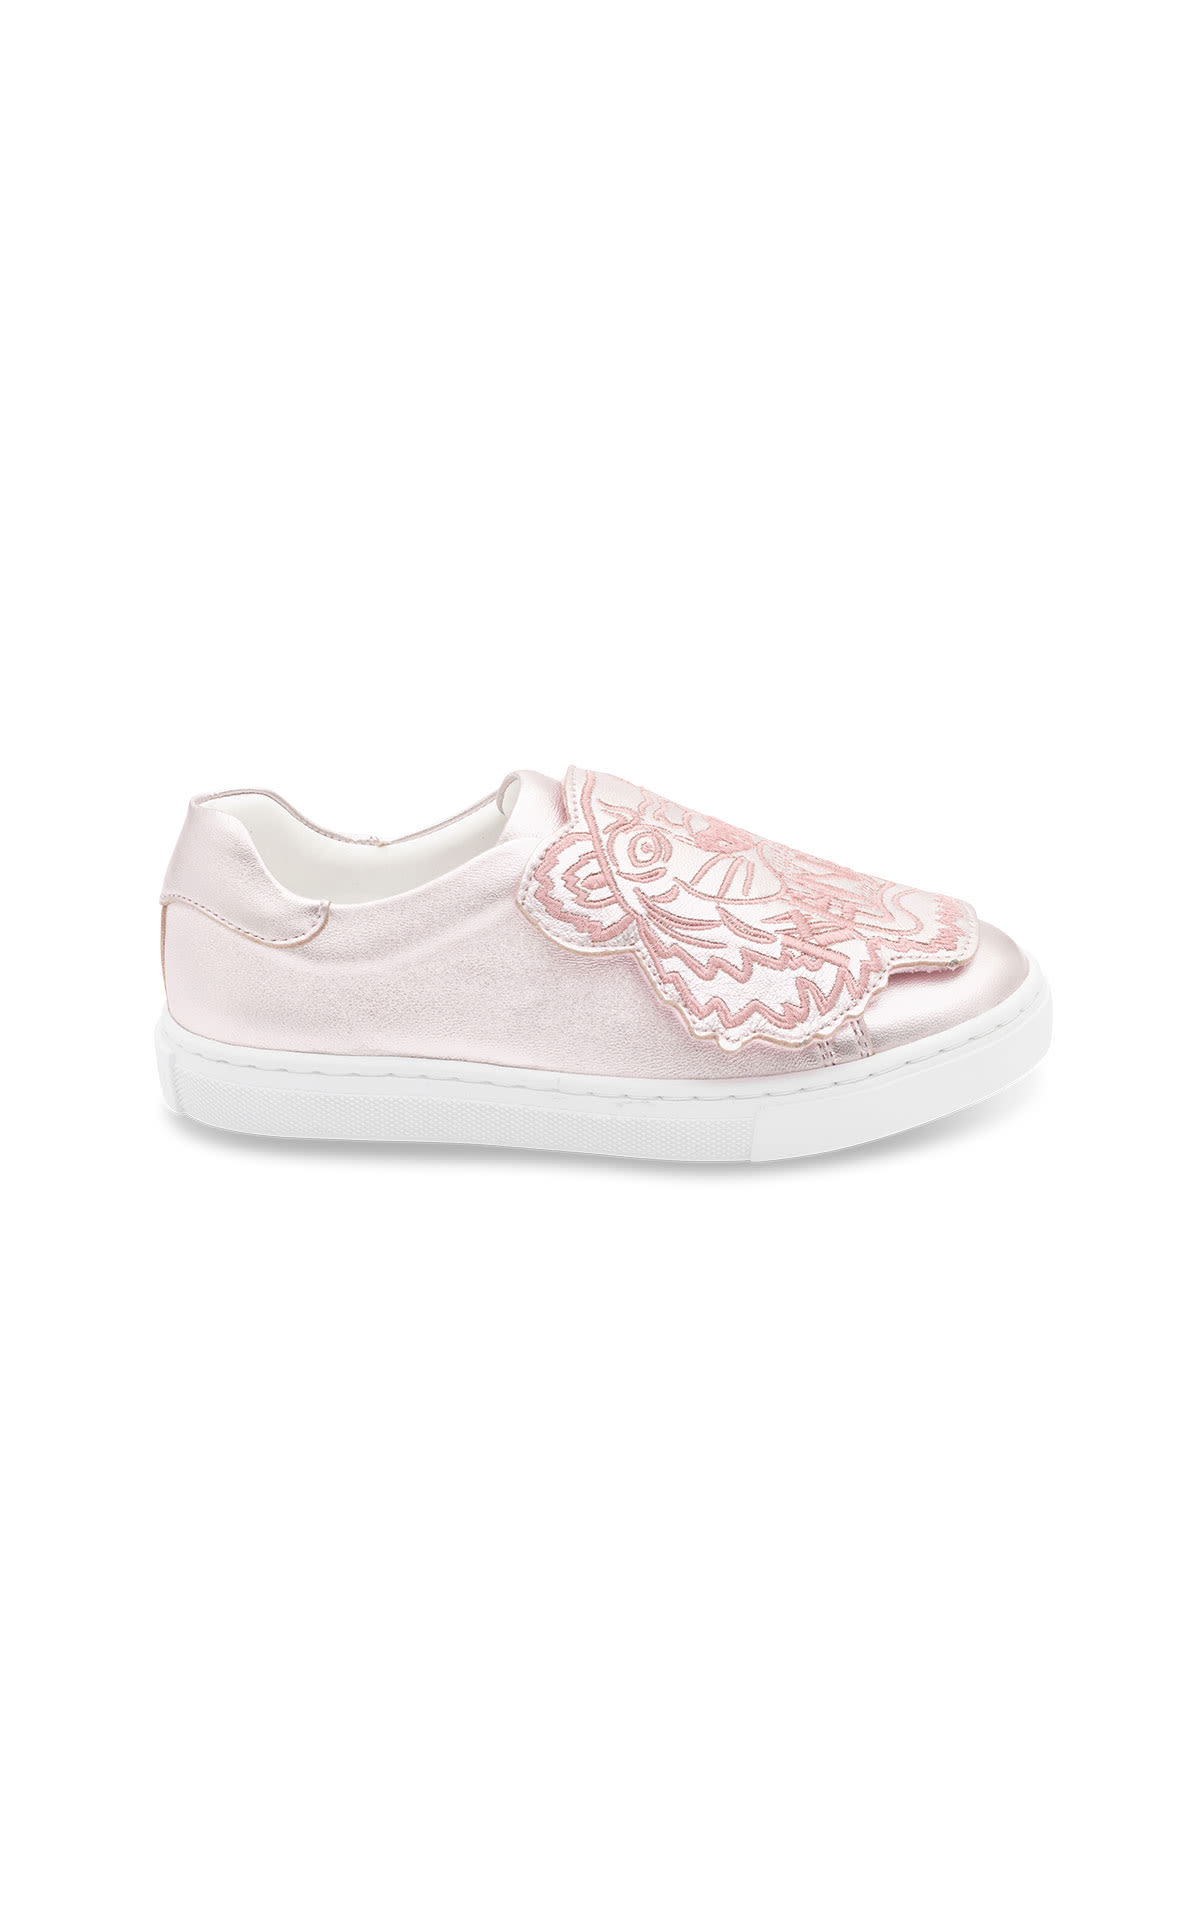 Pink sneakers KENZO Kidsa round